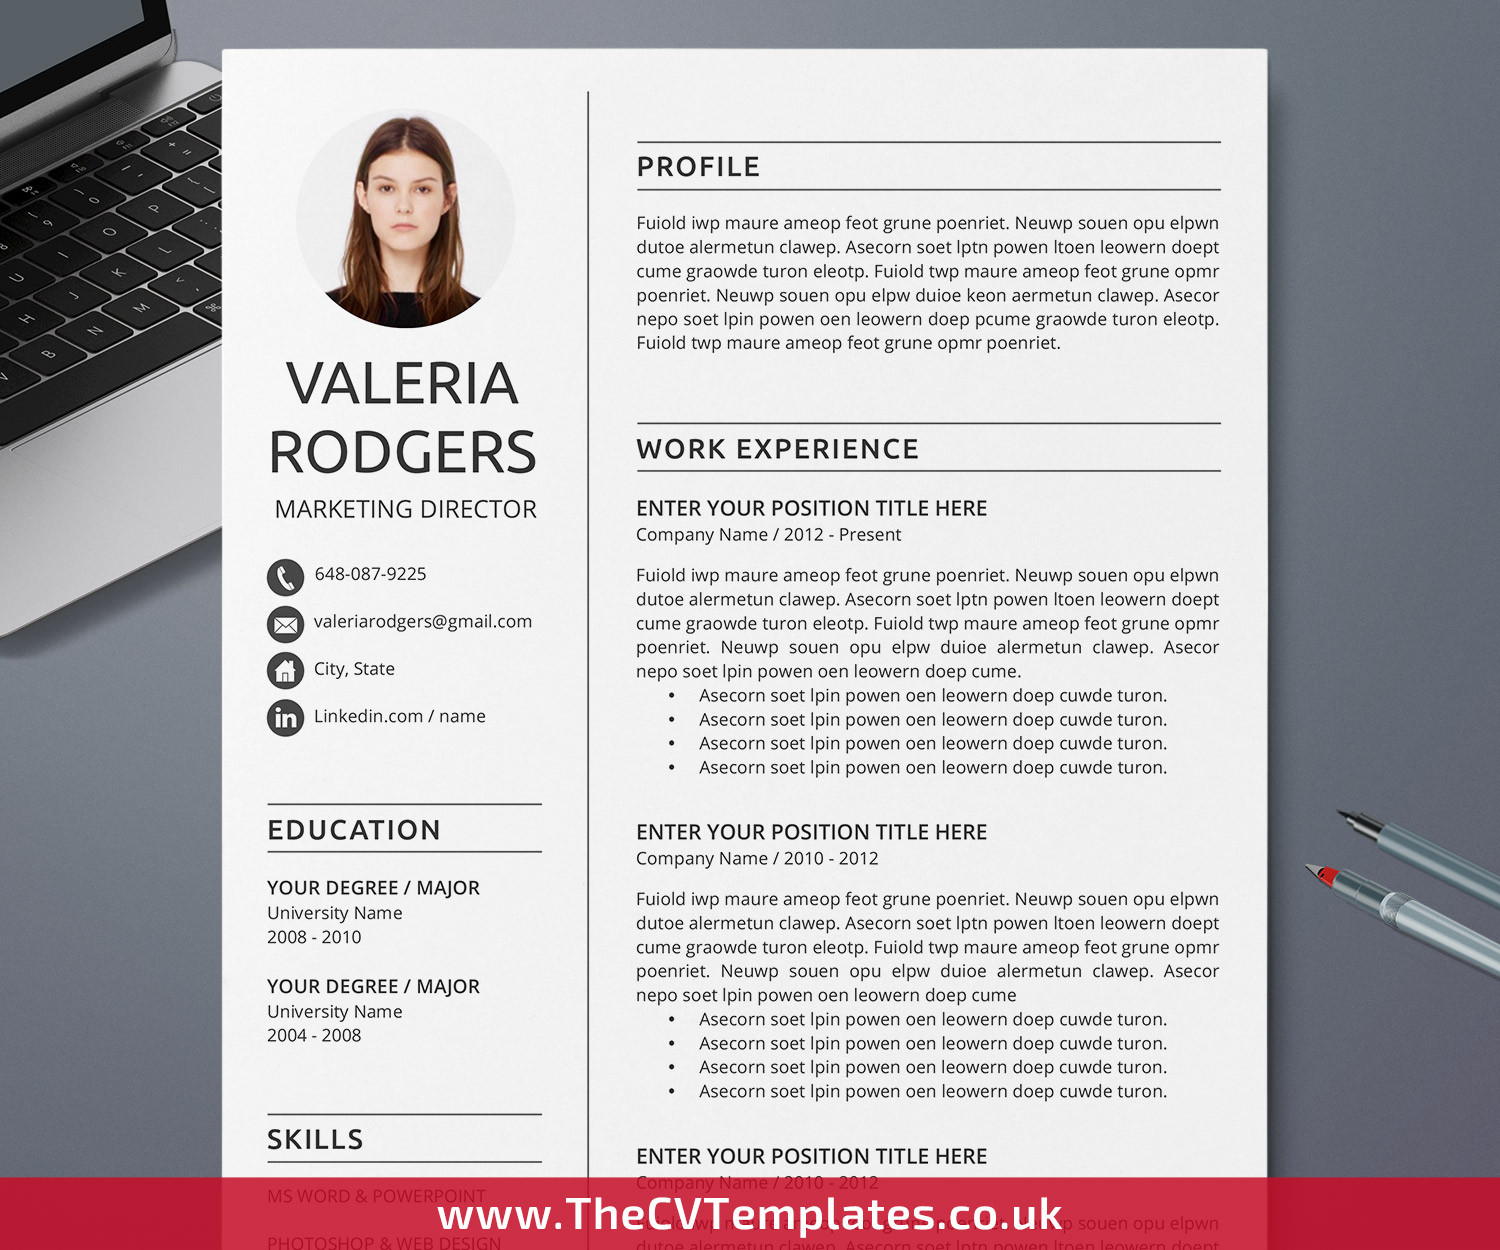 Sample Resume Template for It Professional Professional Cv Template for Microsoft Word, Curriculum Vitae, Modern Resume format, Creative Resume Design, 1, 2, 3 Page Resume, Editable Simple …